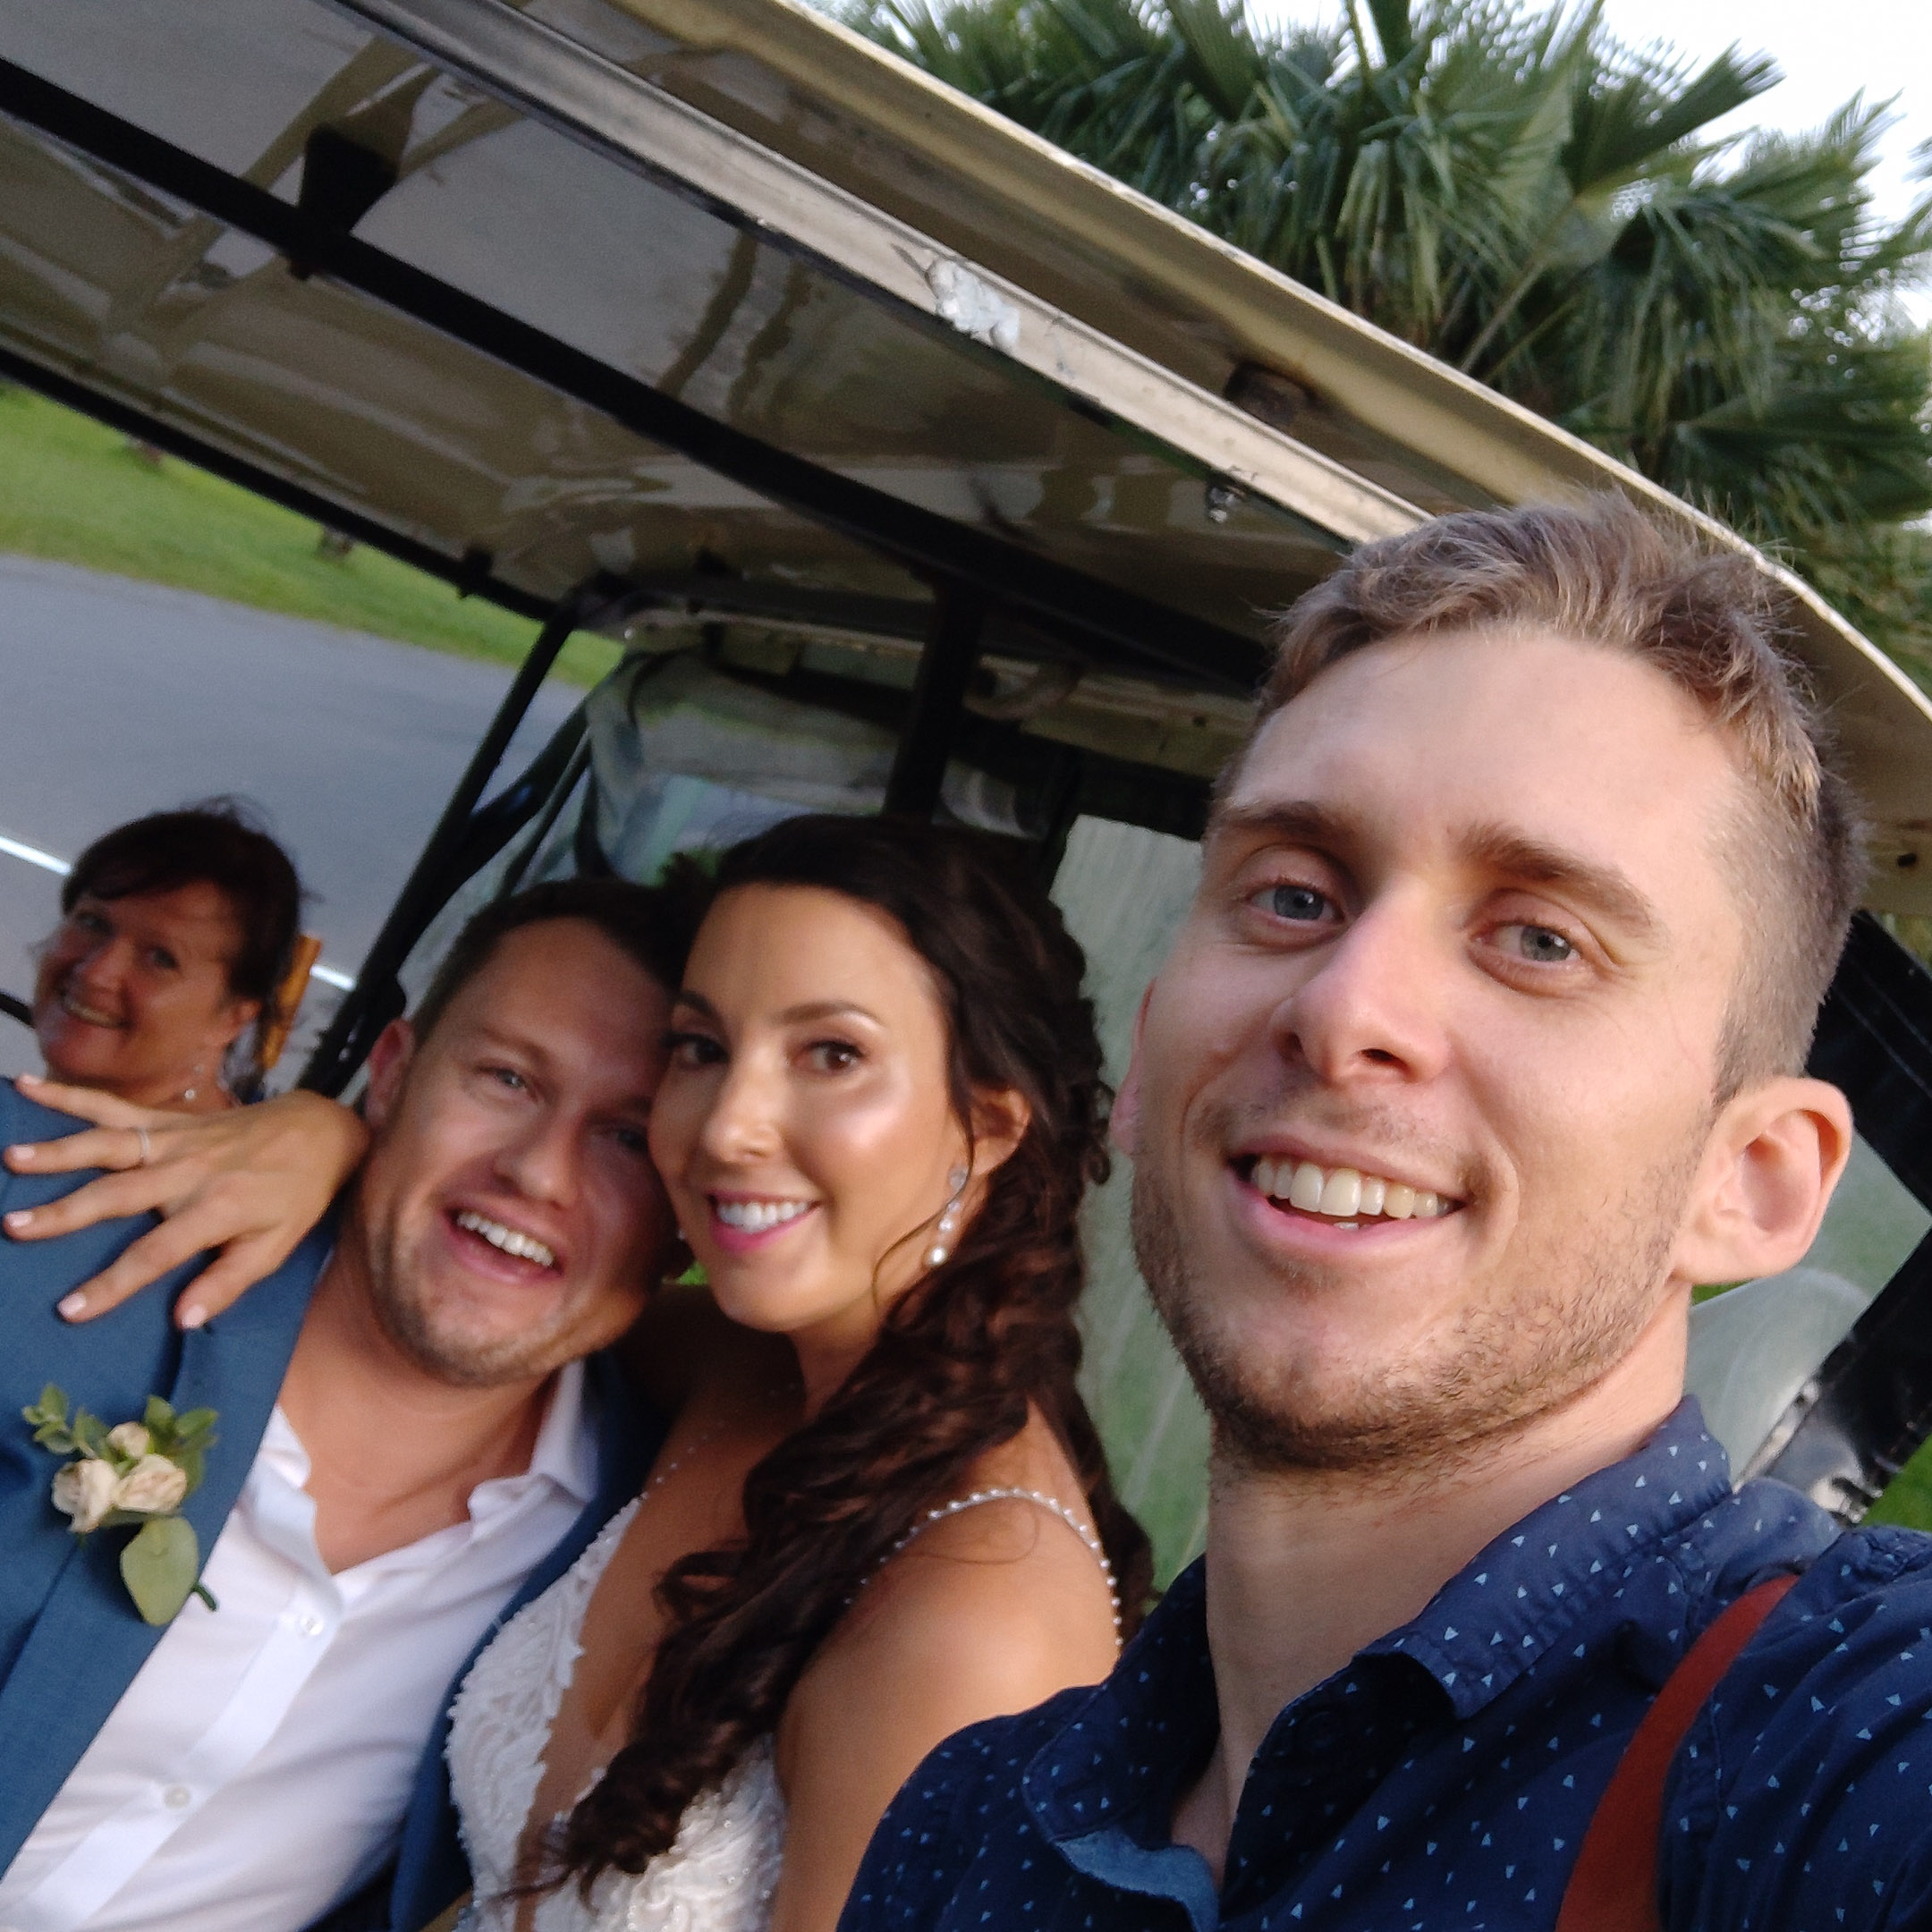 The-raw-photographer-cairns-wedding-photography-bridalparty-selfie-3.jpg